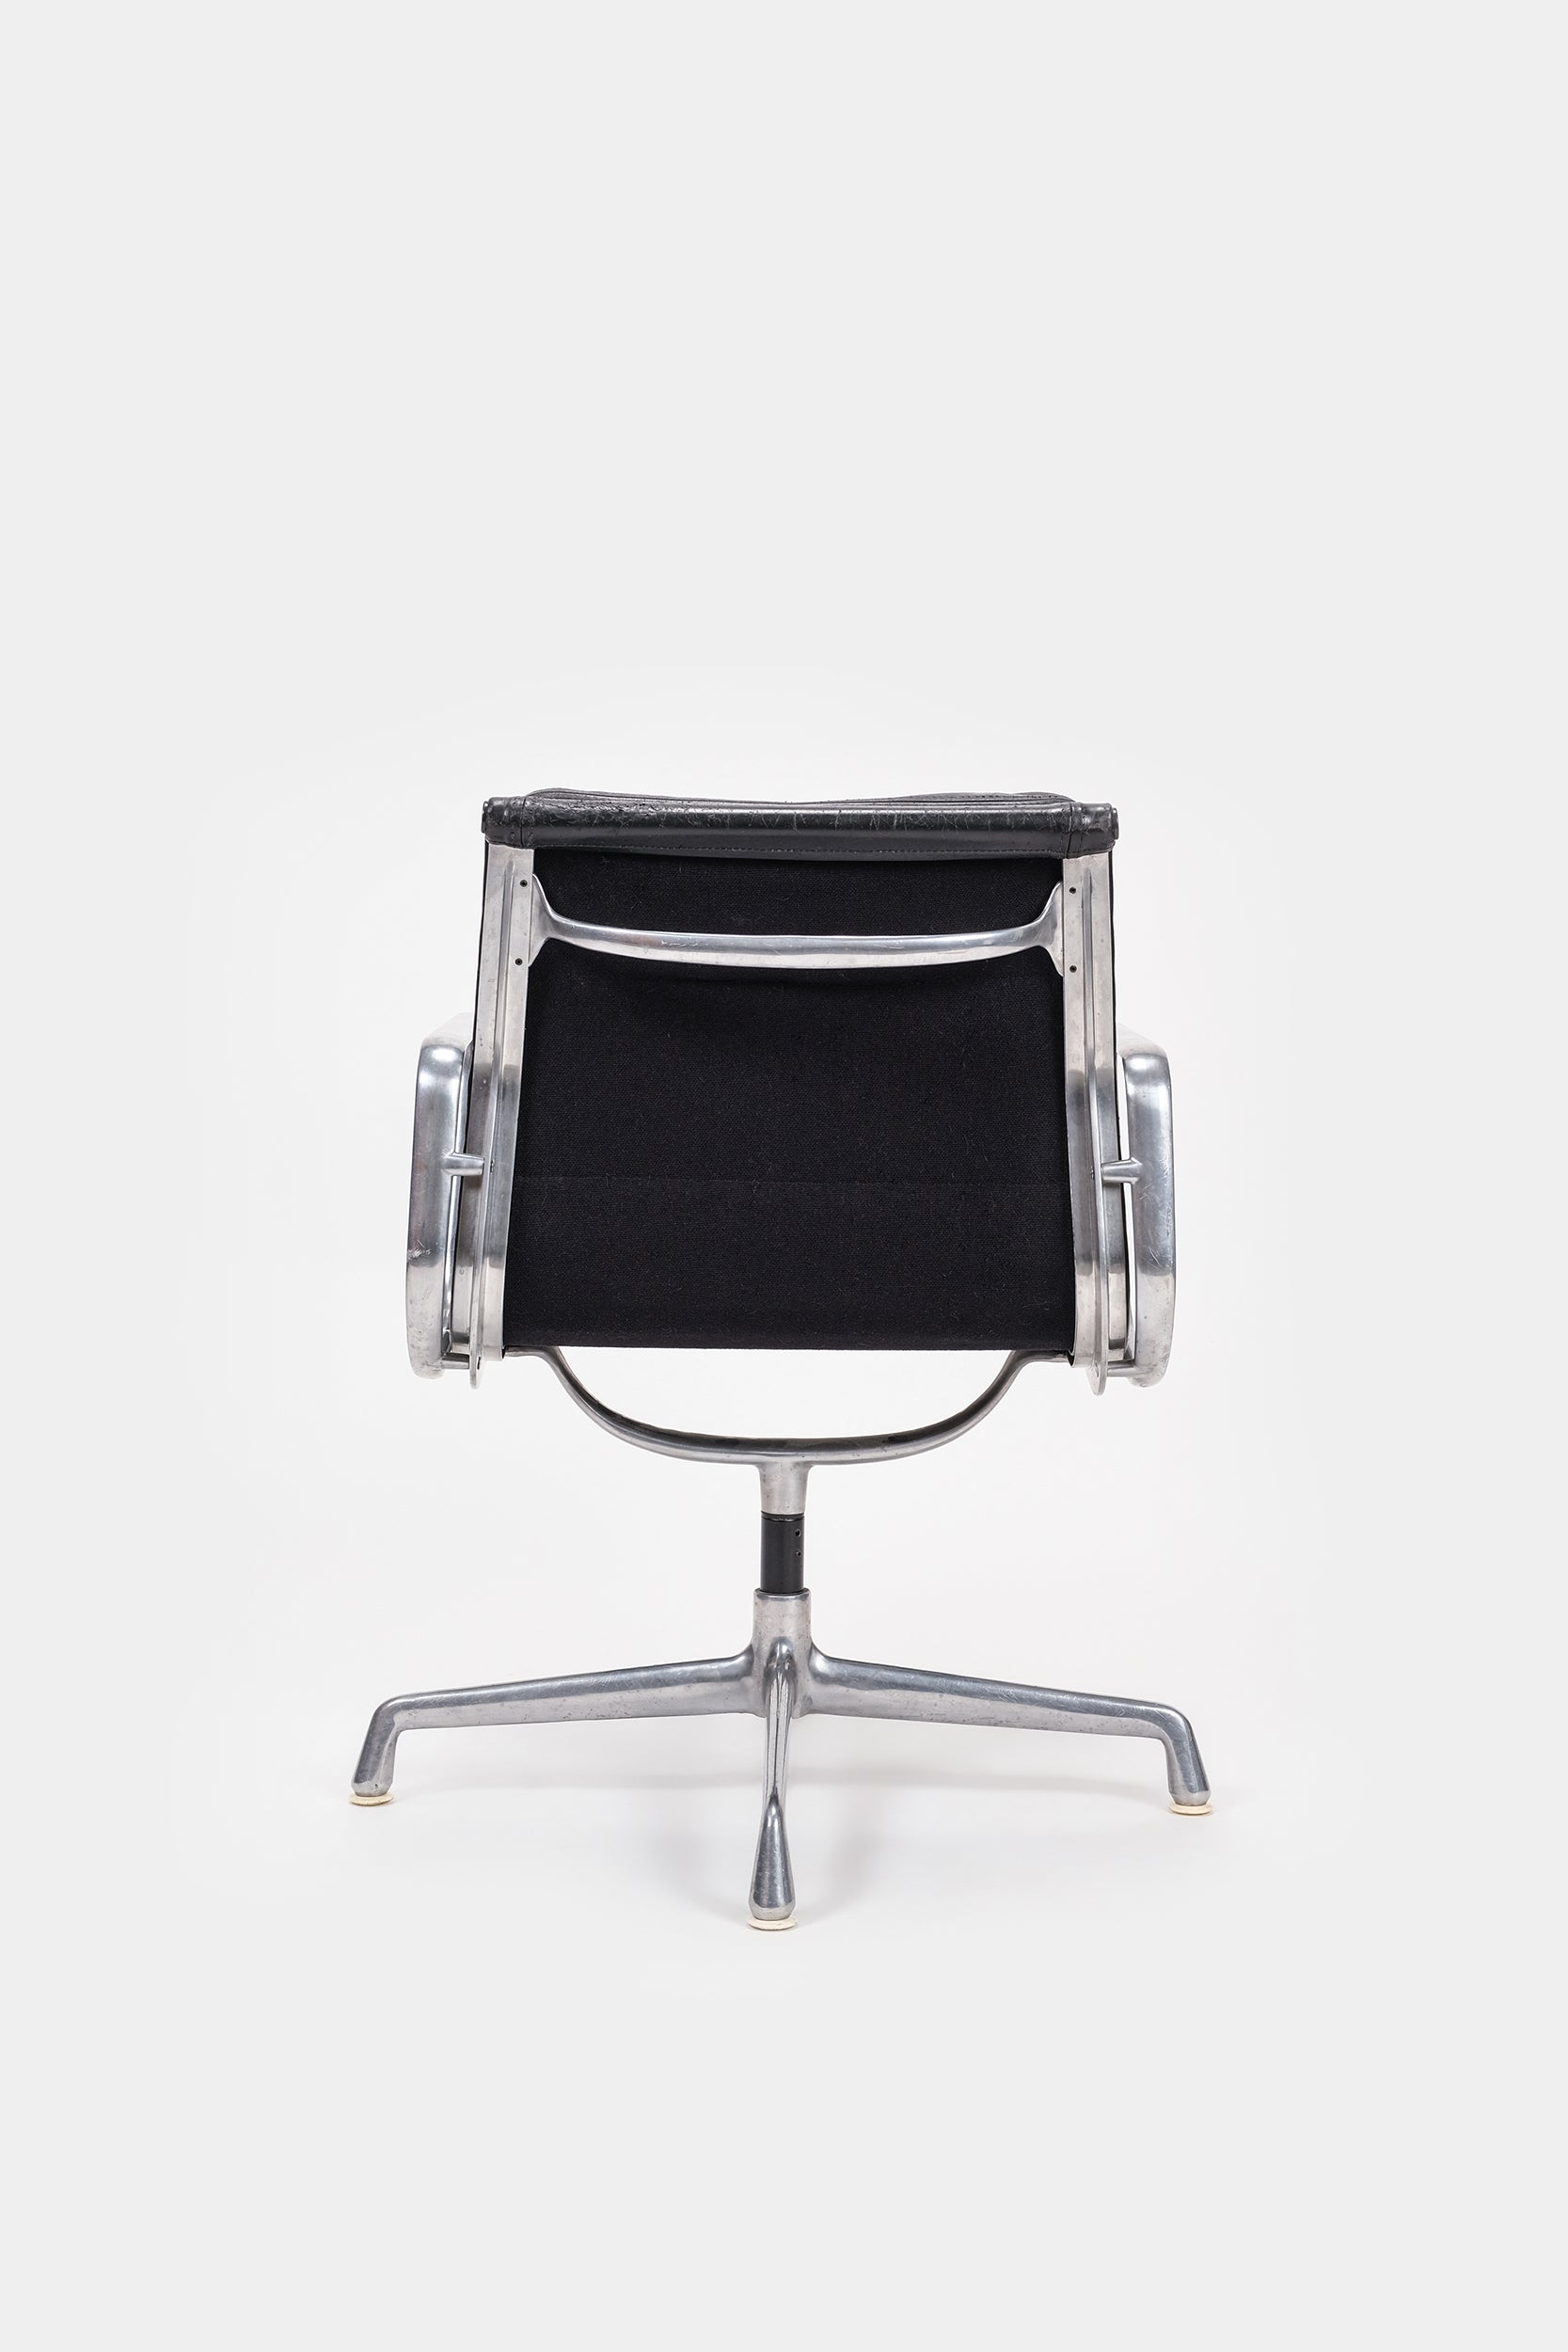 Charles Eames, EA208 Soft Pad Swivel Chair